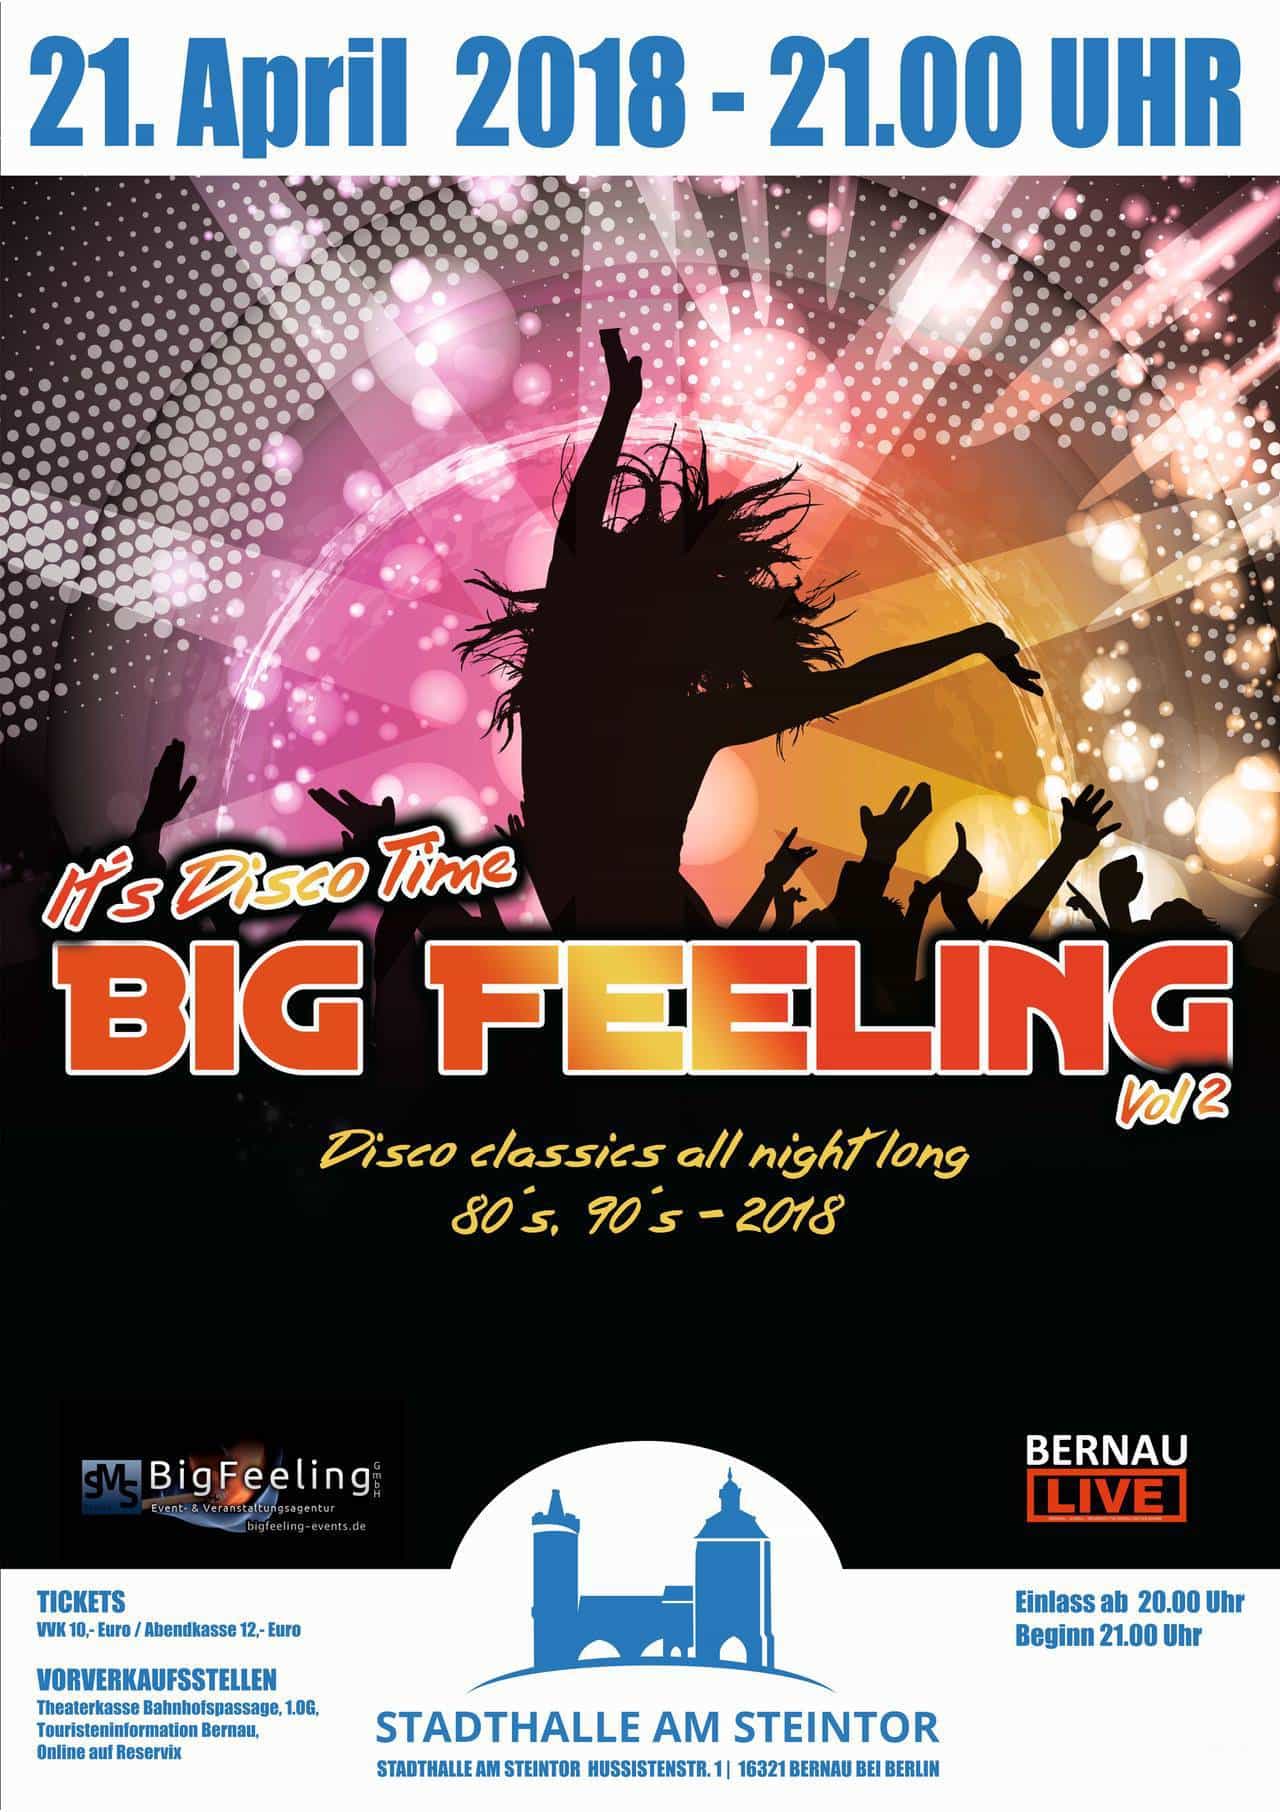 Bernau: “Big Feeling” Vol. 2 - große Disco-Party am 21. April 2018